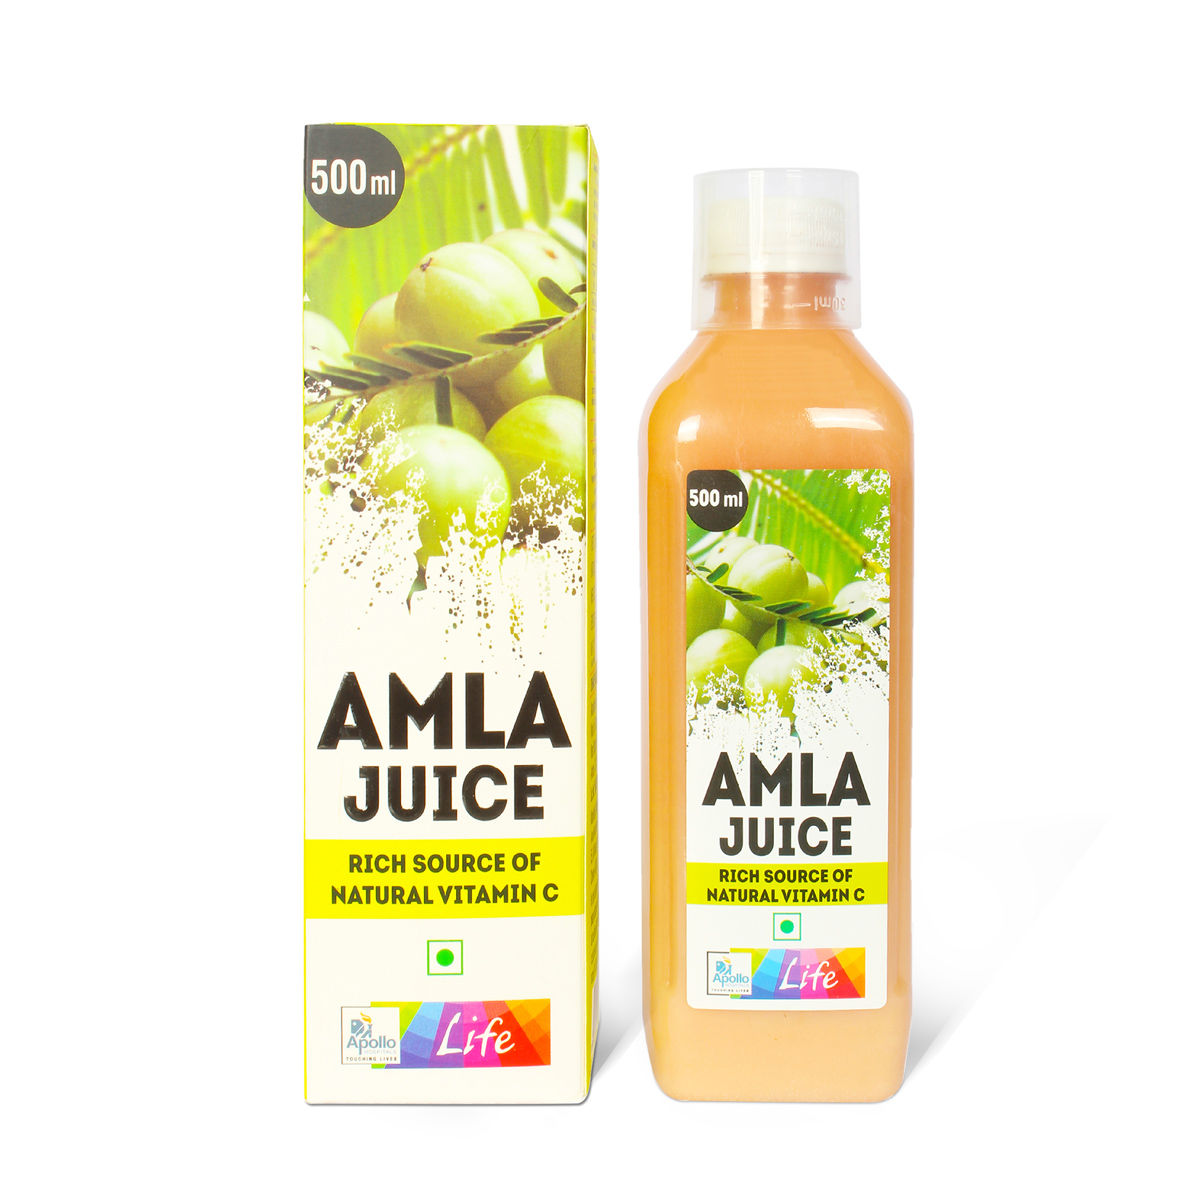 Apollo Life Natural Amla Juice, 500 ml, Pack of 1 